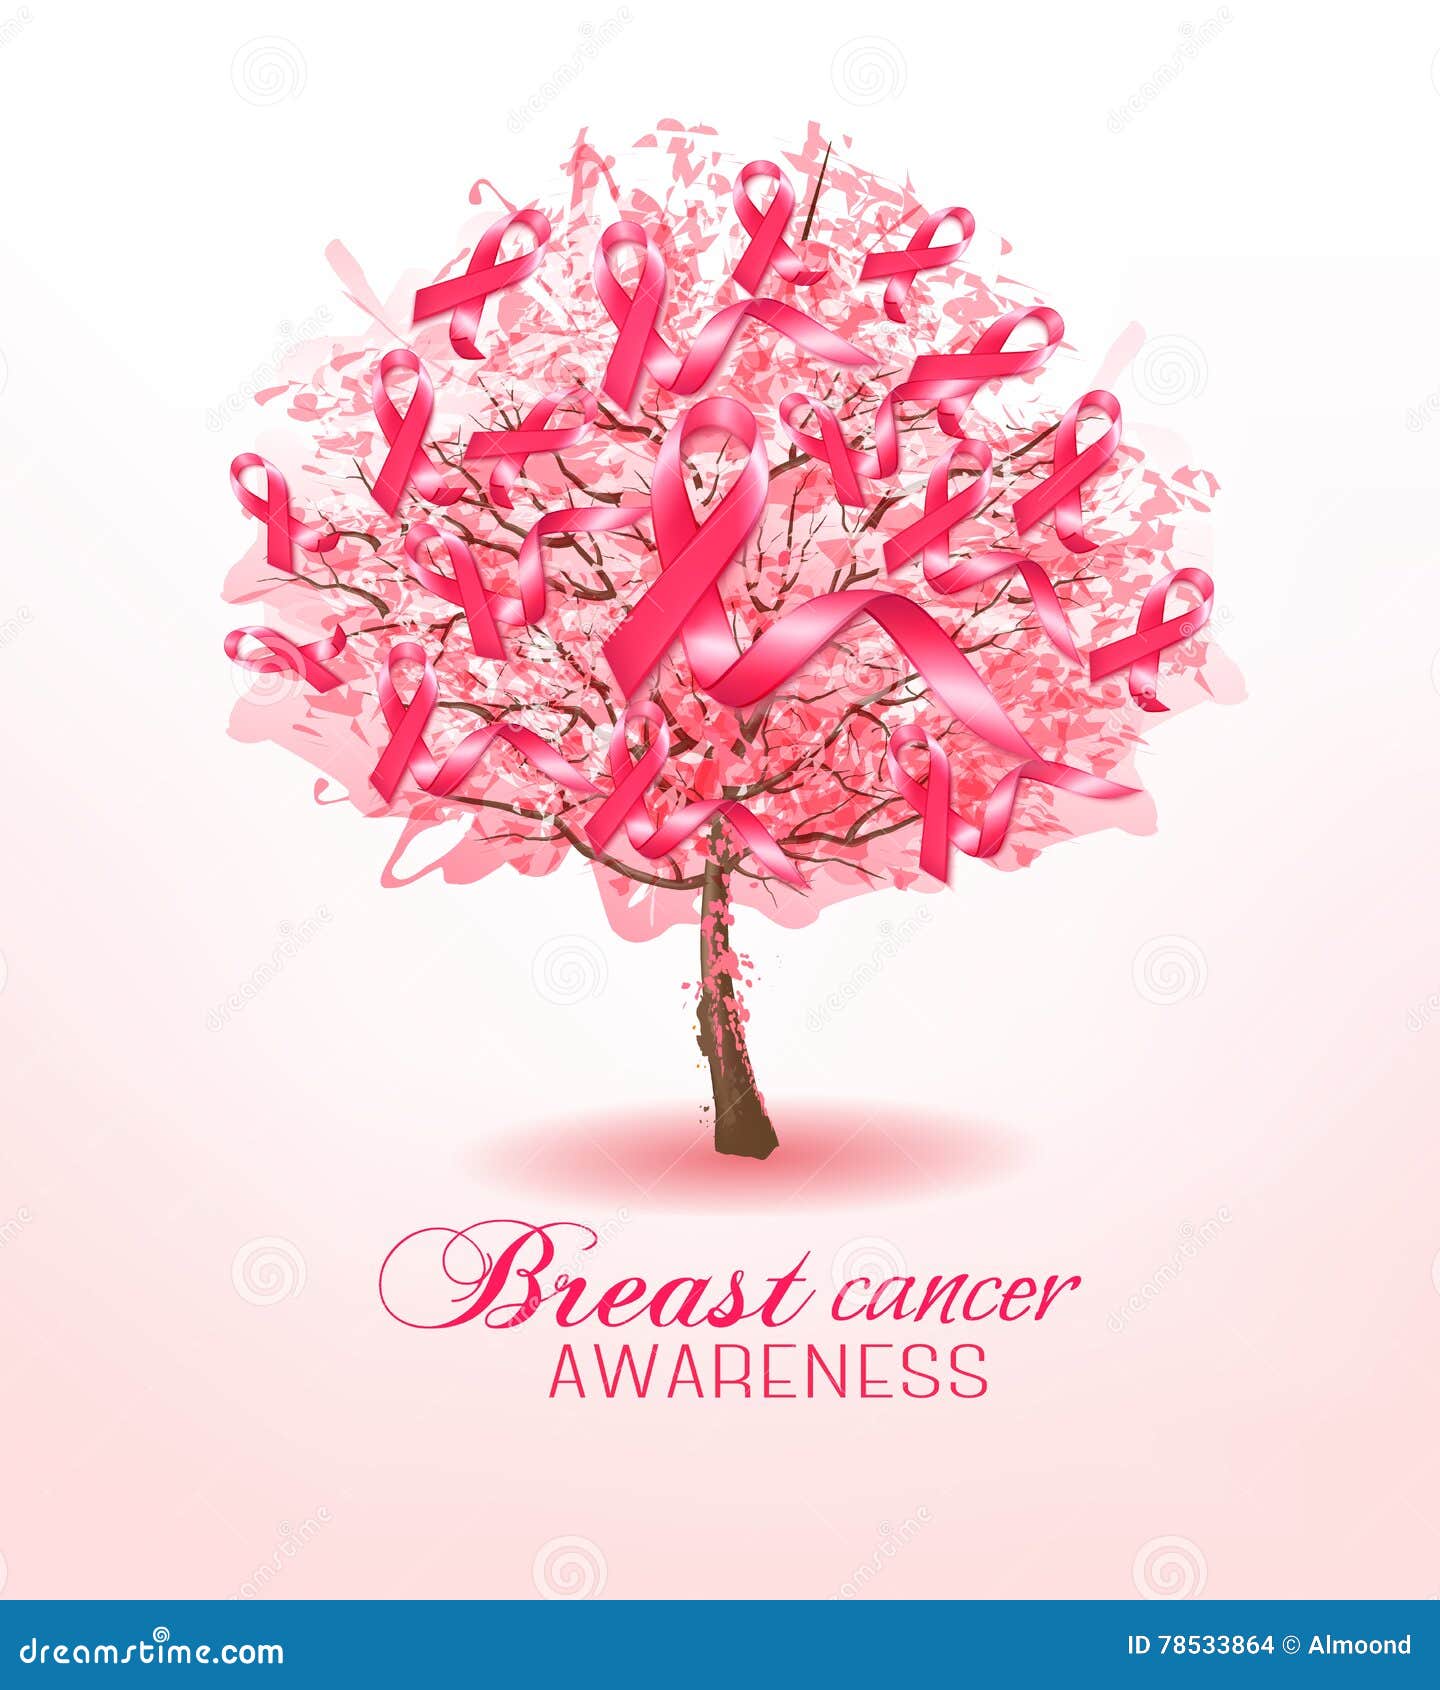 breast cancer awareness ribbons on a sakura tree.